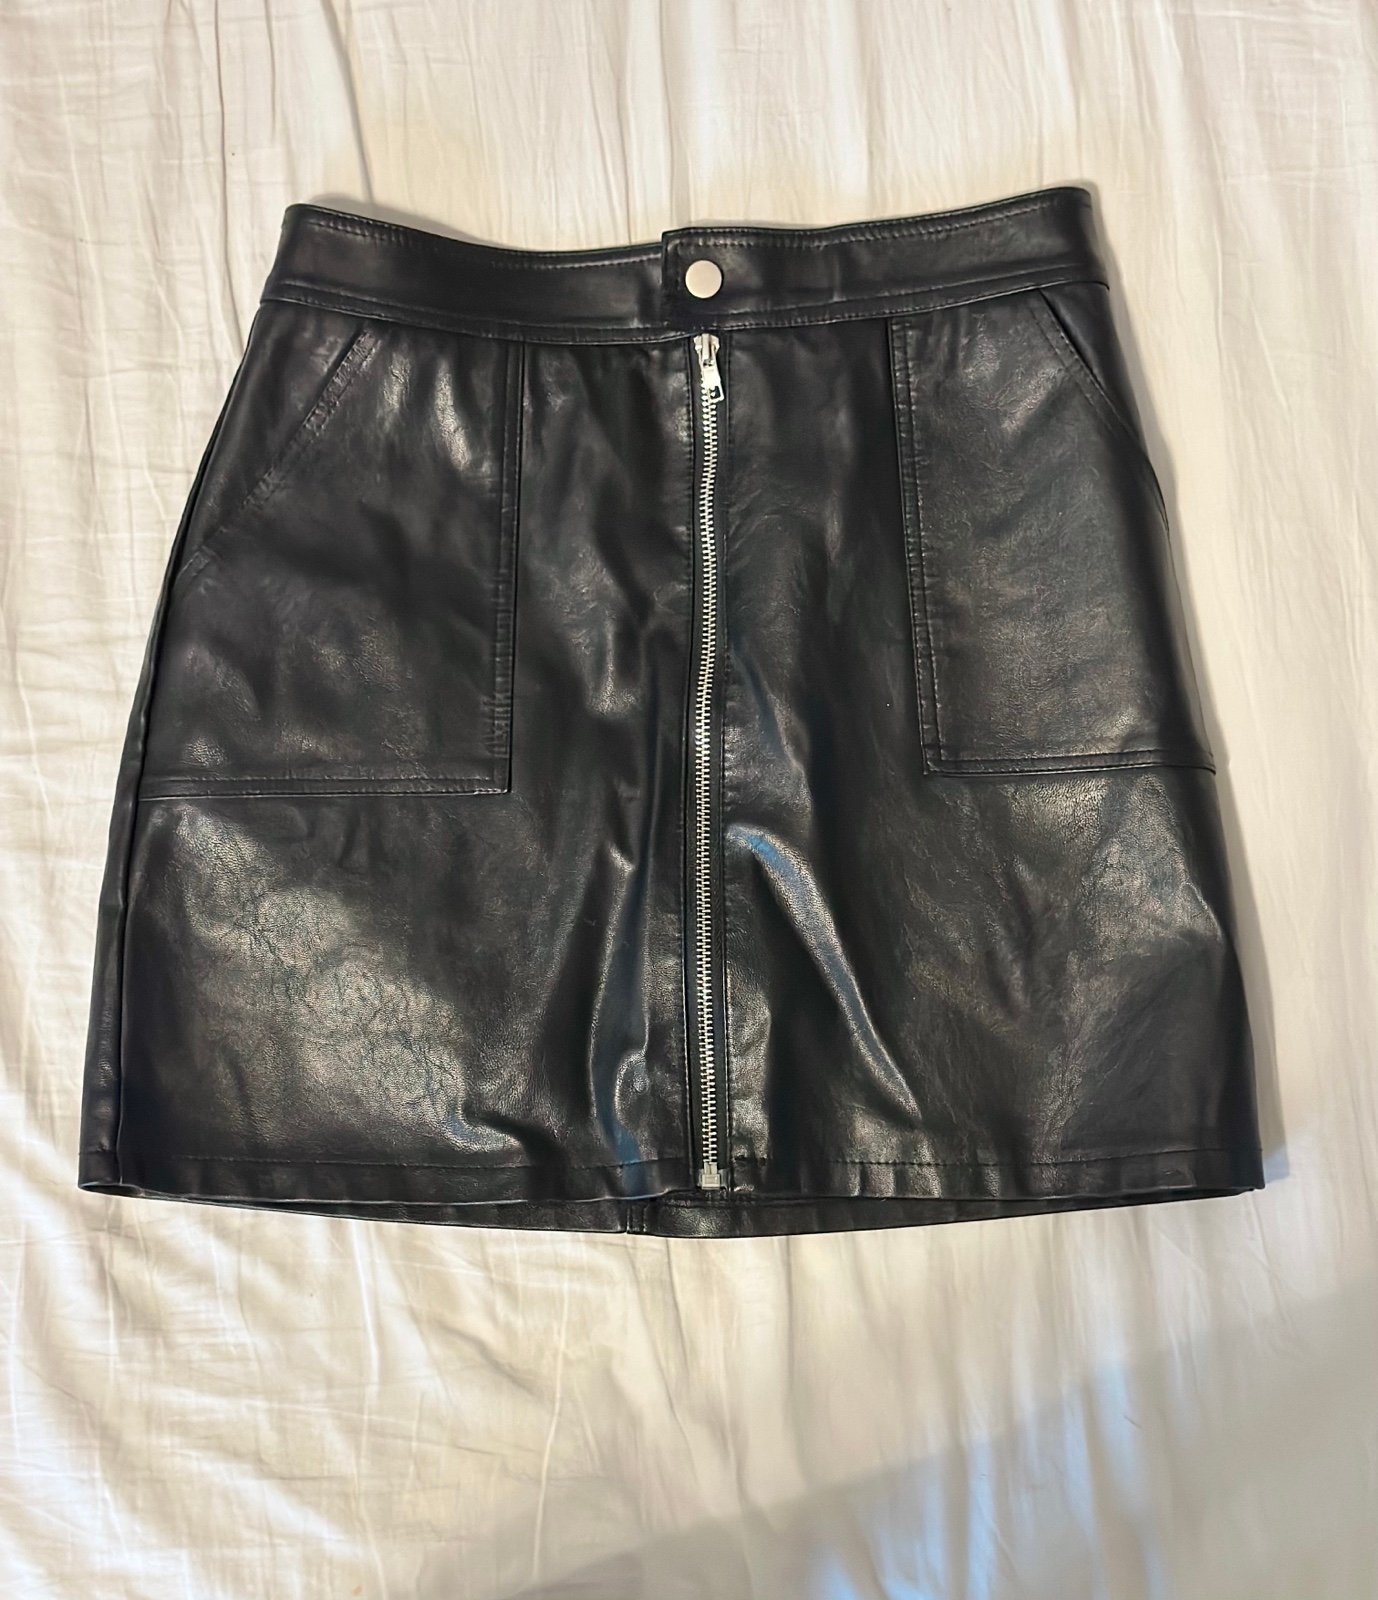 Buy Faux Leather Mini-Skirt noU8XHtN2 just buy it